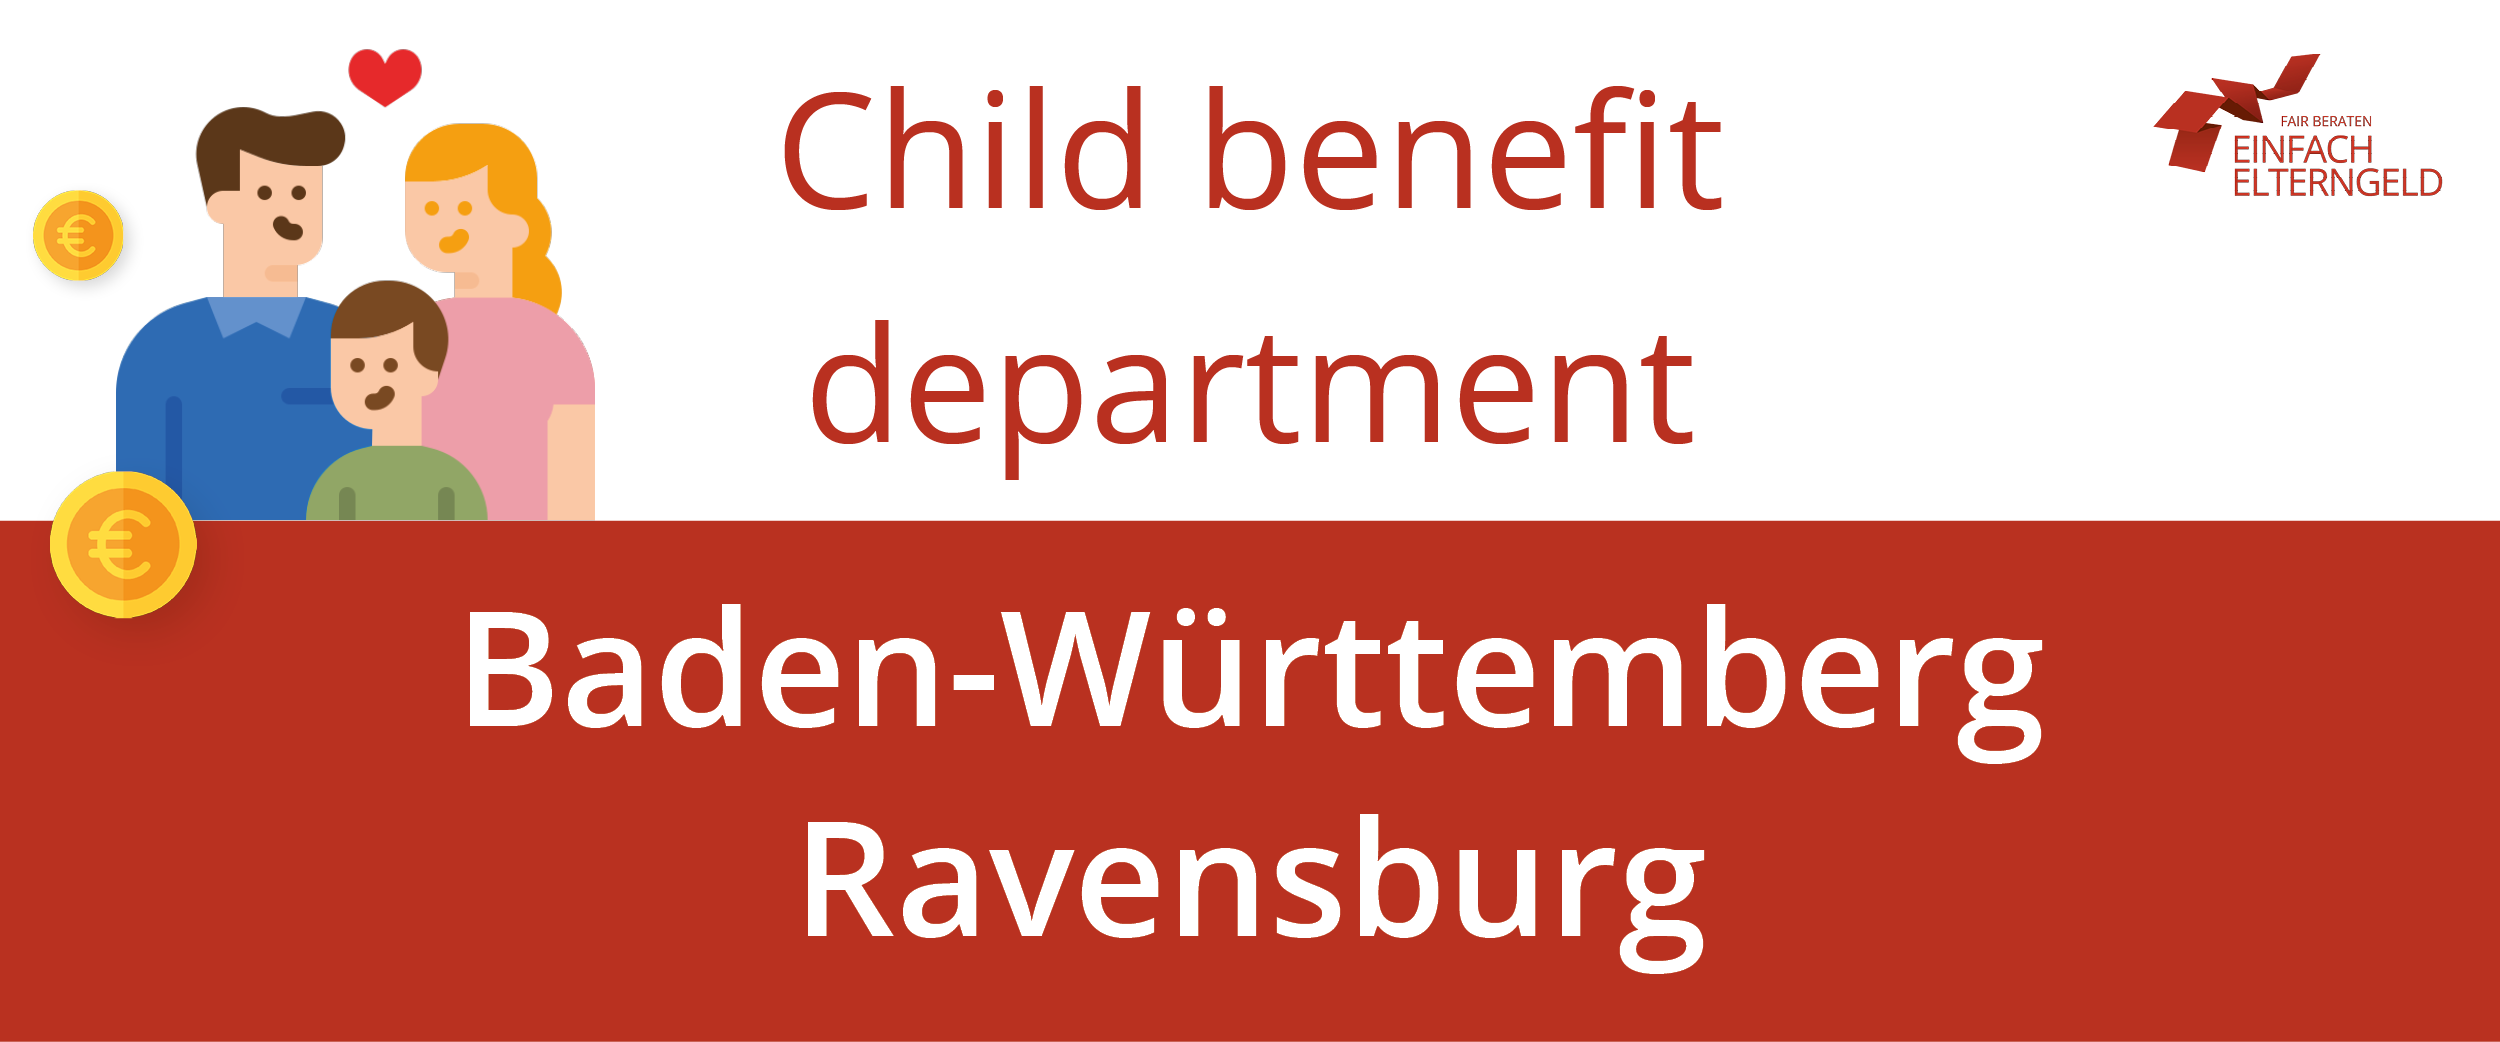 We present you the Child benefit department Baden-Württemberg Ravensburg.